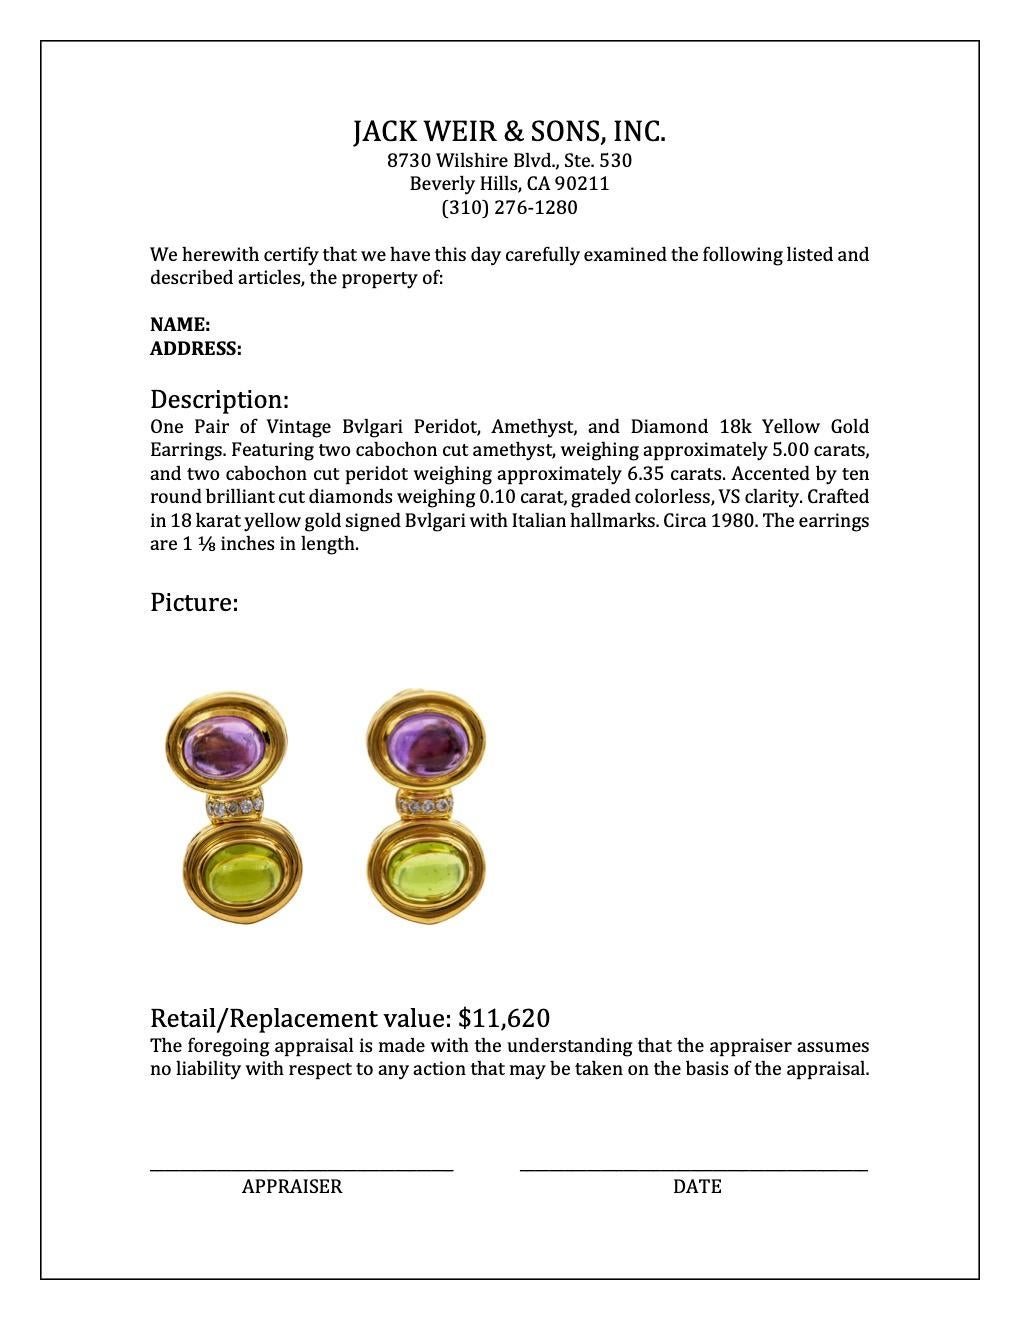 Vintage Bvlgari Peridot, Amethyst, and Diamond 18k Yellow Gold Earrings 1